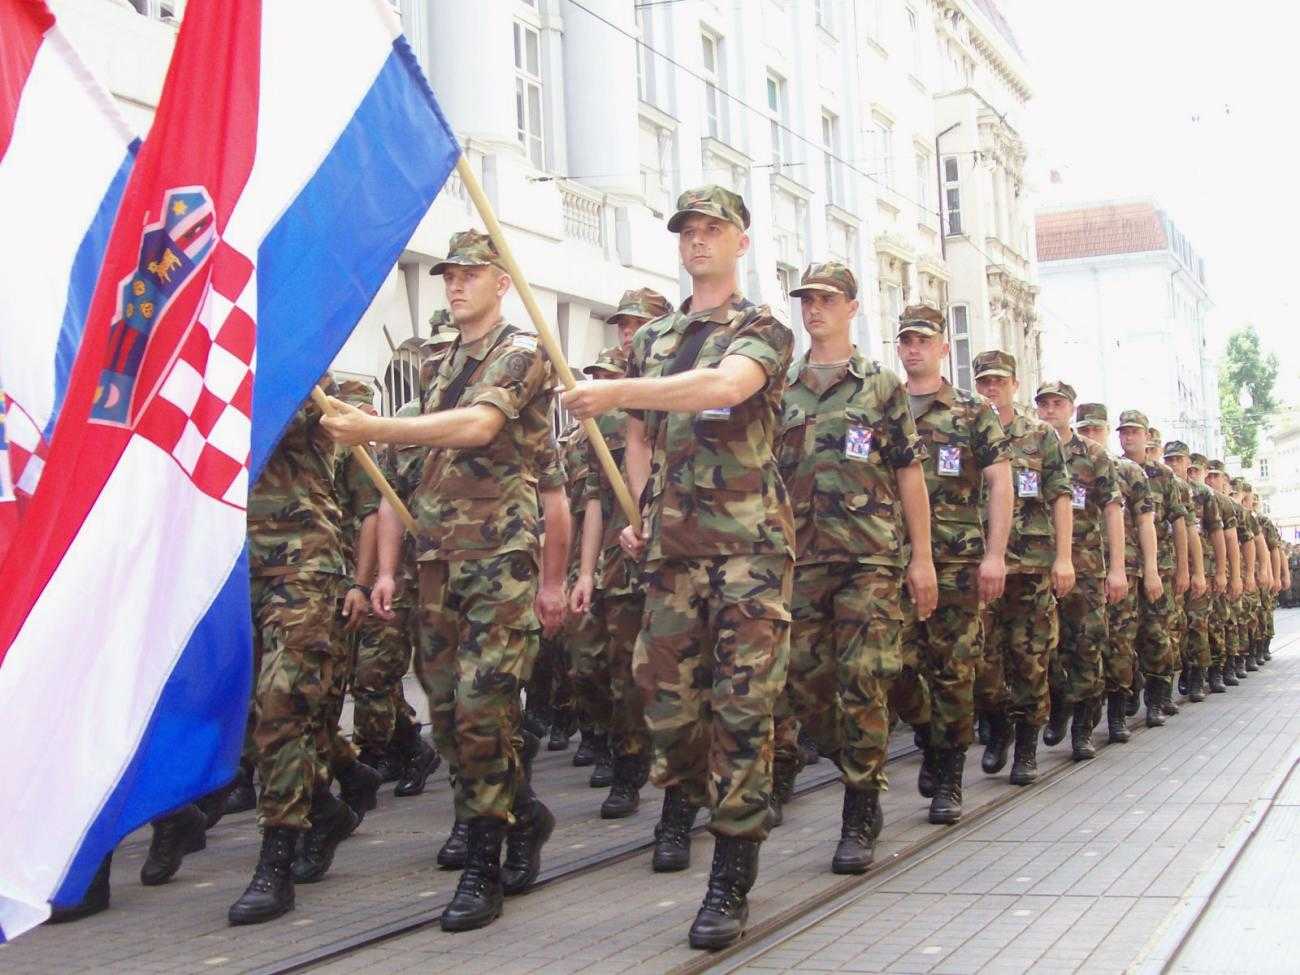 A military parade in Croatia